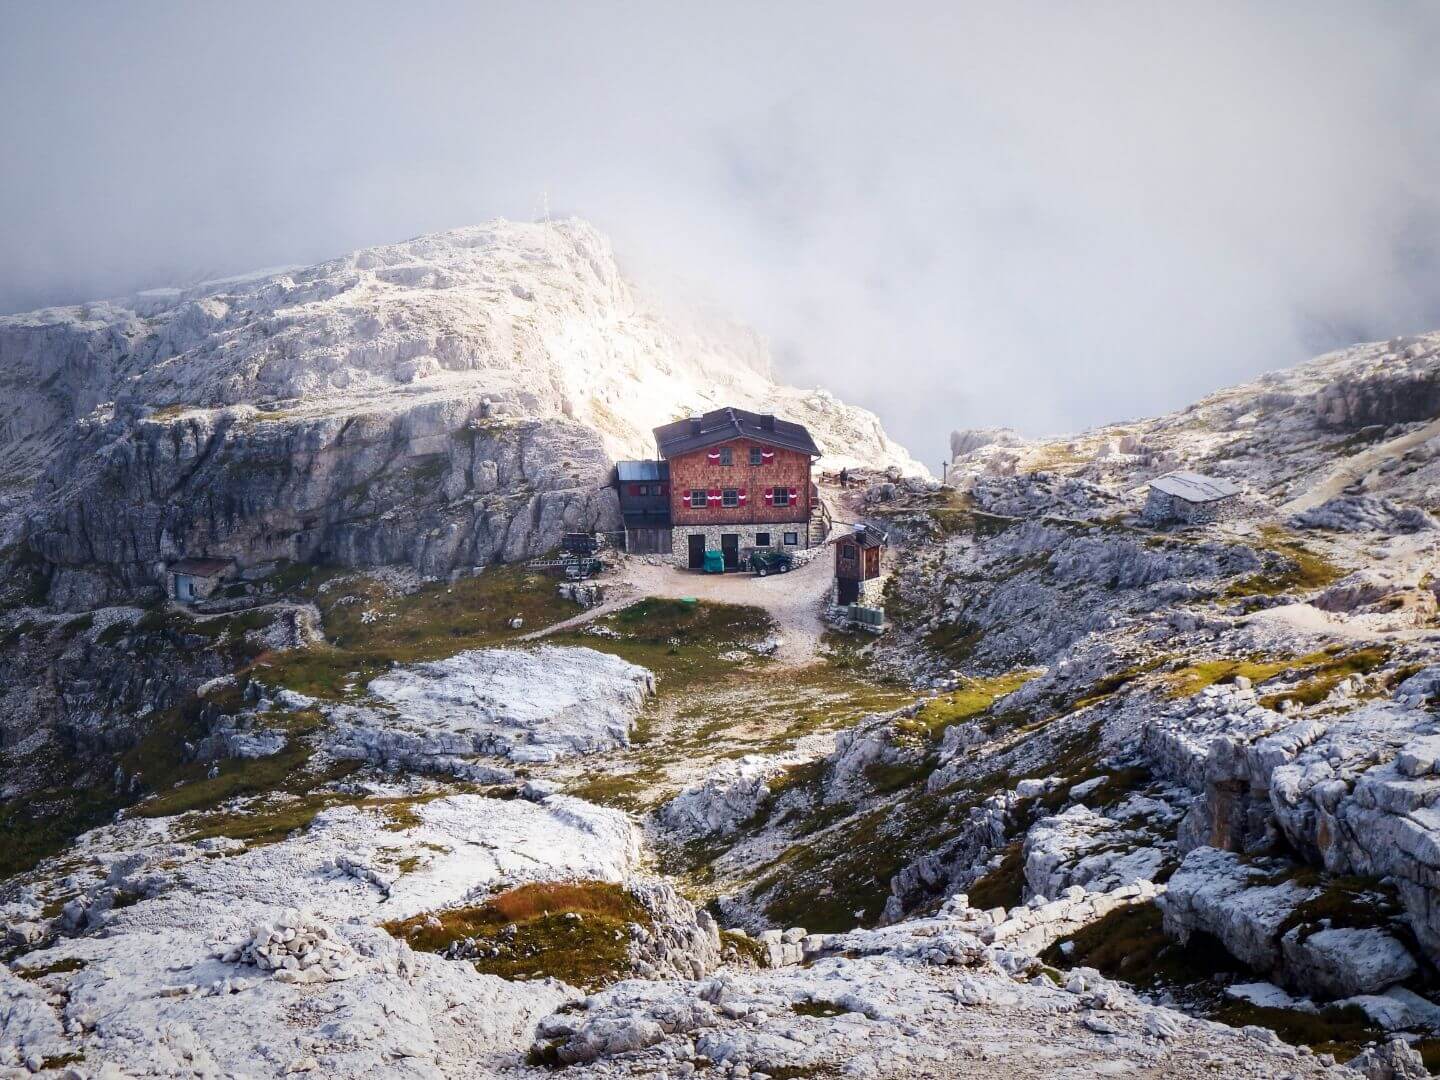 Büllelejochhütte (Rifugio Pian di Cengia), Trekking Tre Cime di Lavaredo - Hut to Hut